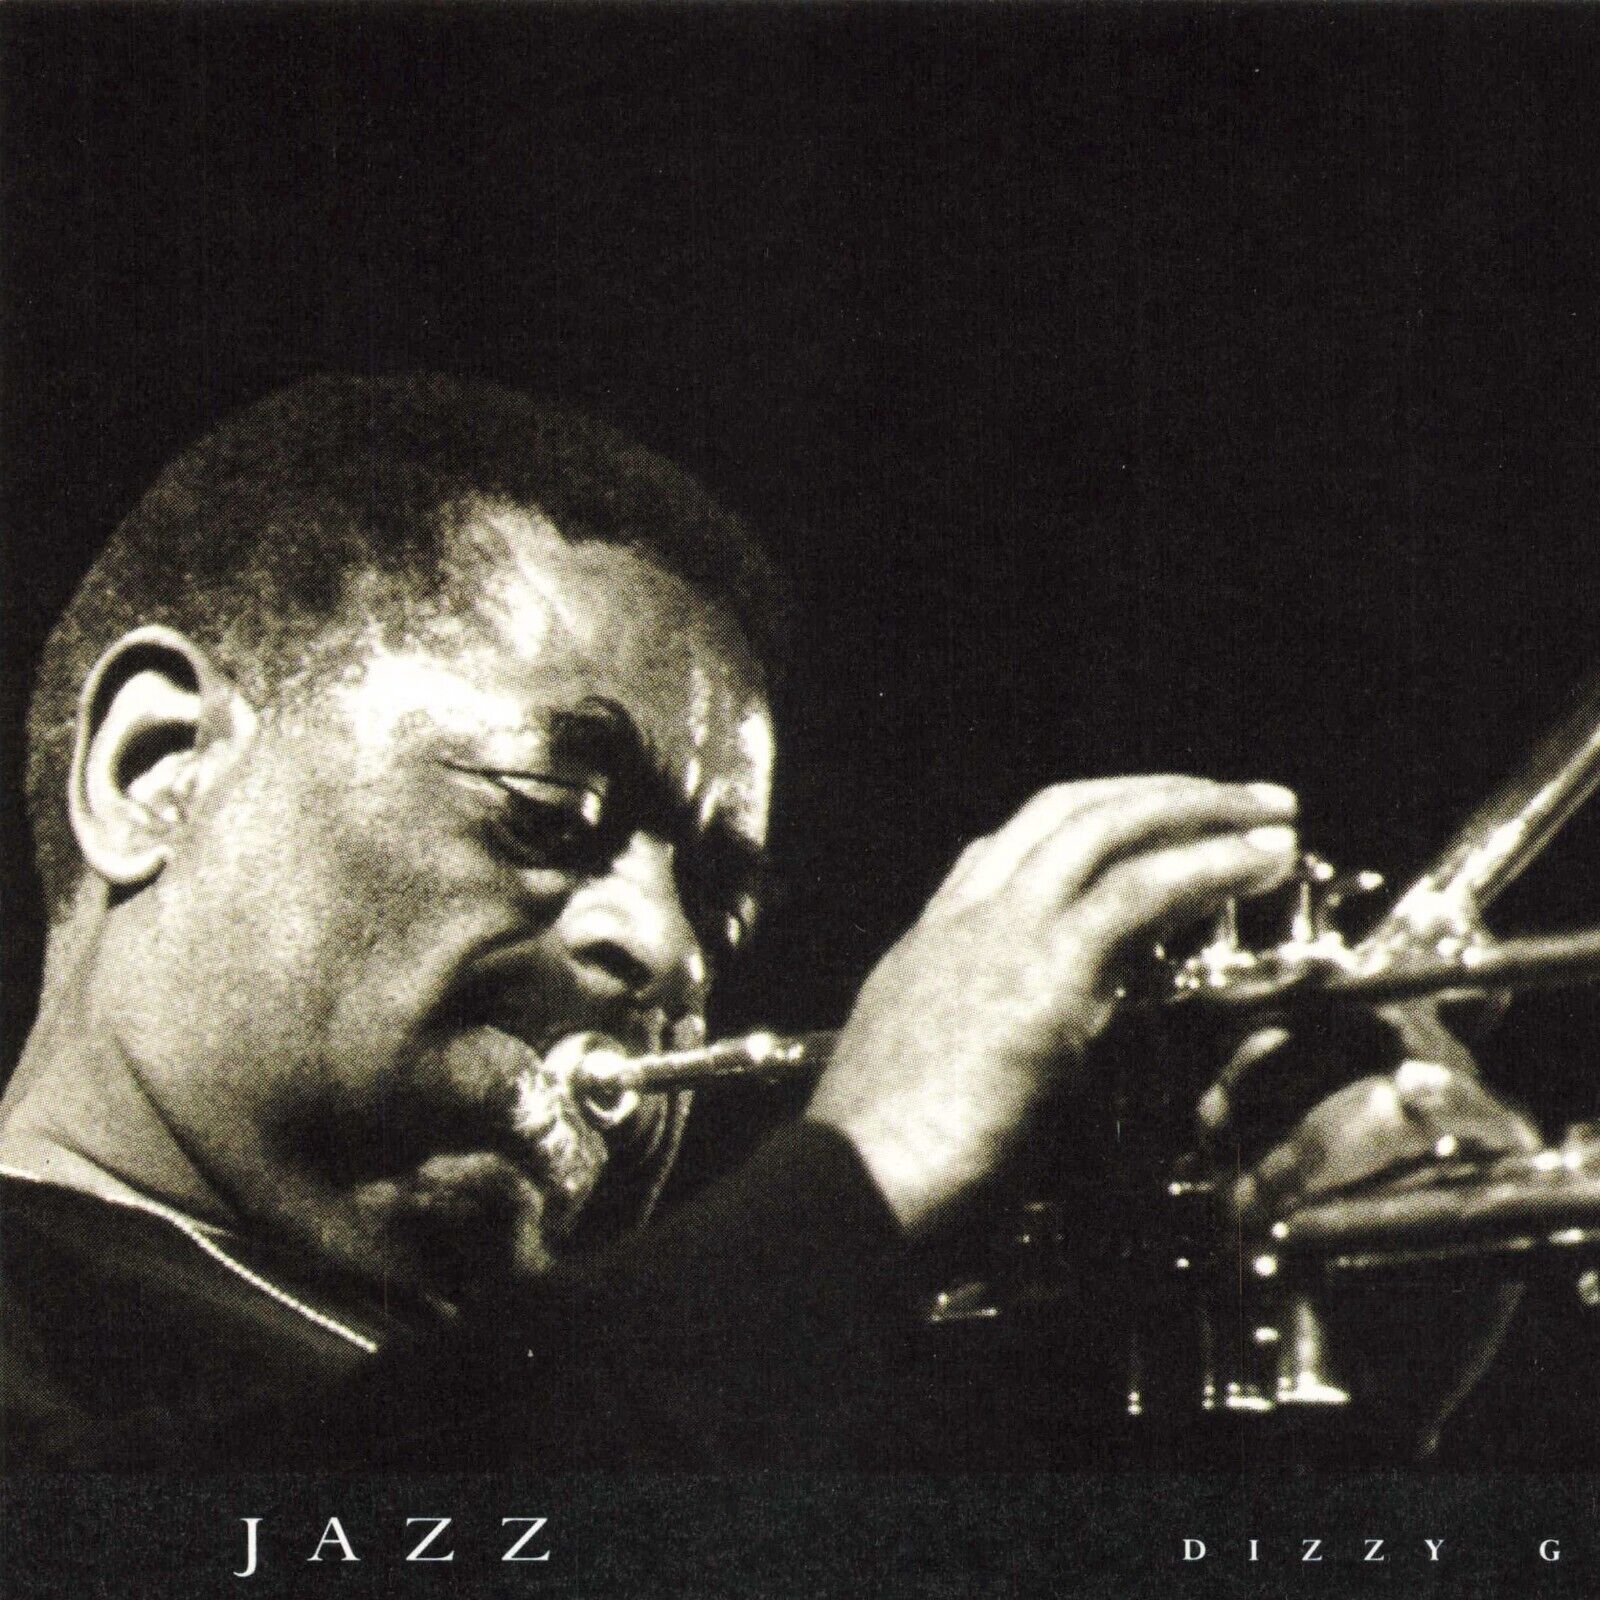 Postcard Dizzy Gillespie American Jazz Trumpeter Bandleader Composer Singer